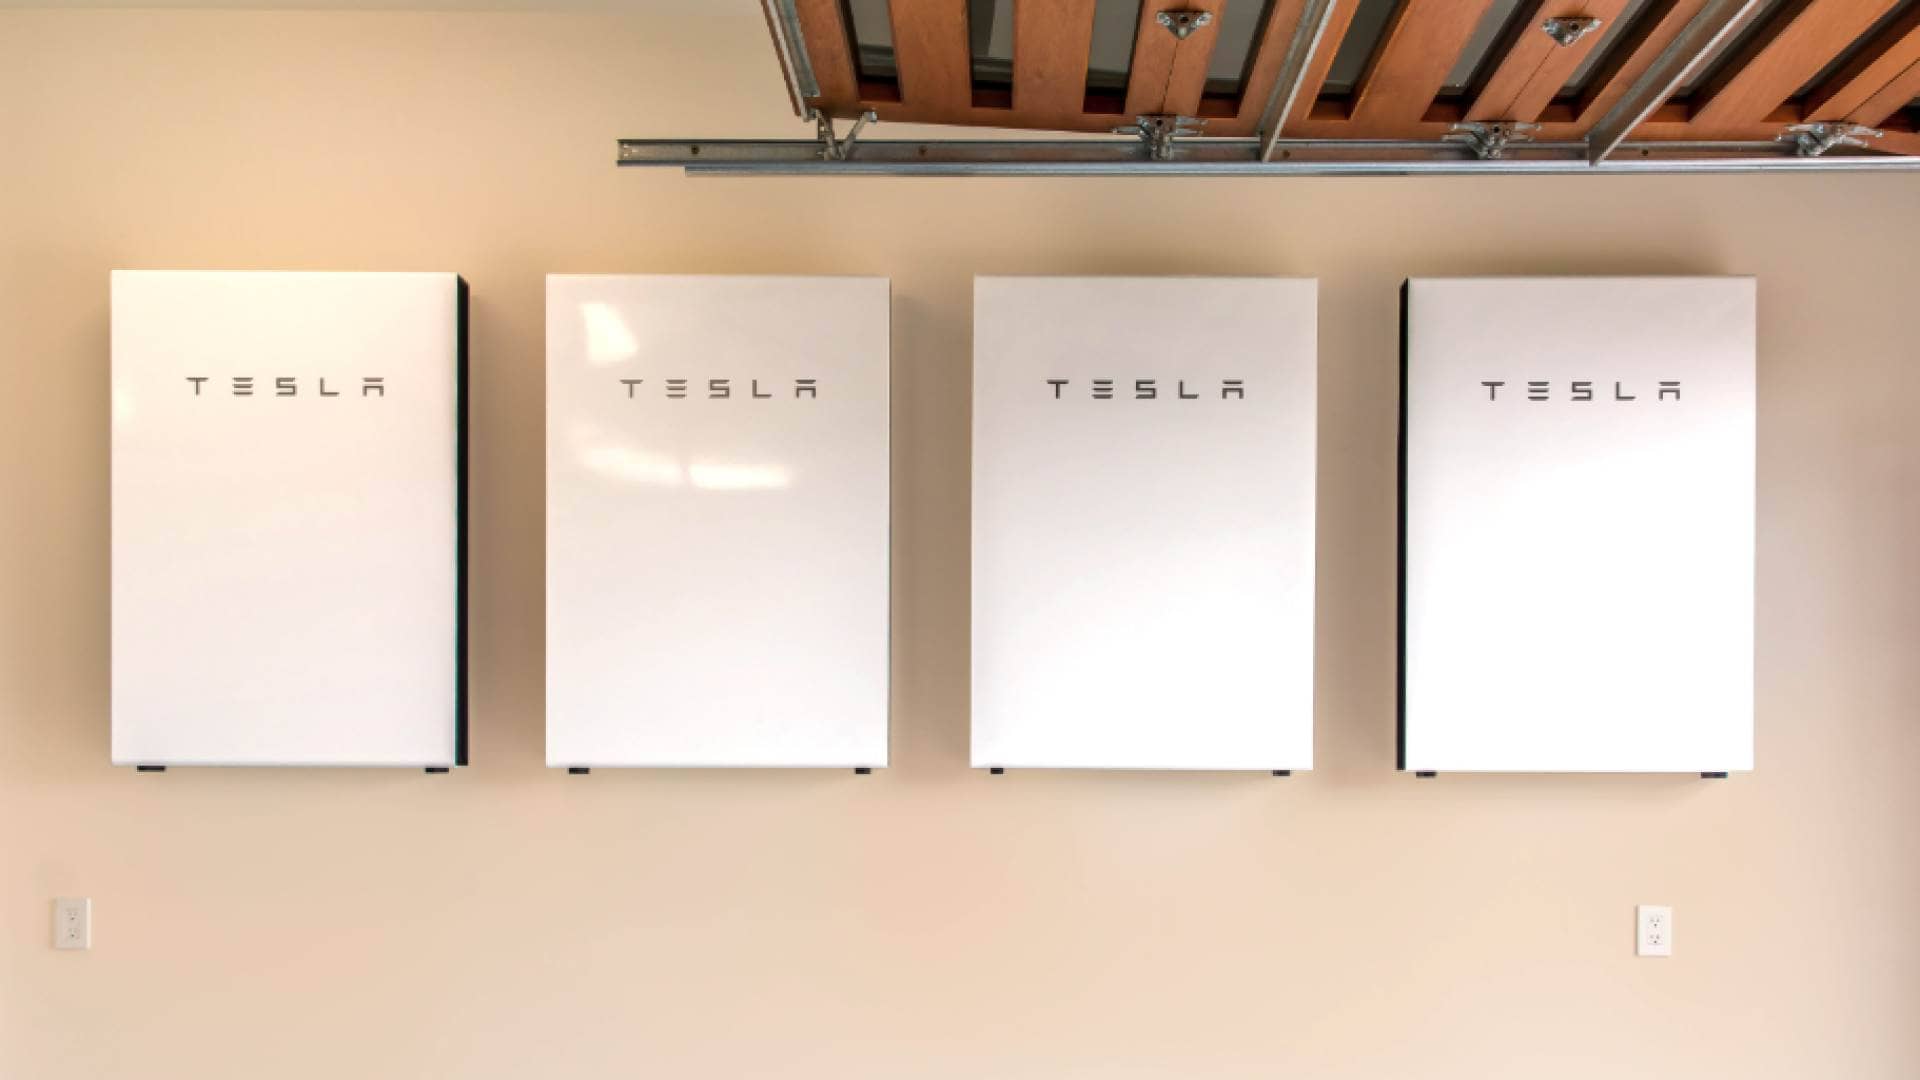 Tesla Power Wall for Maui home battery back up